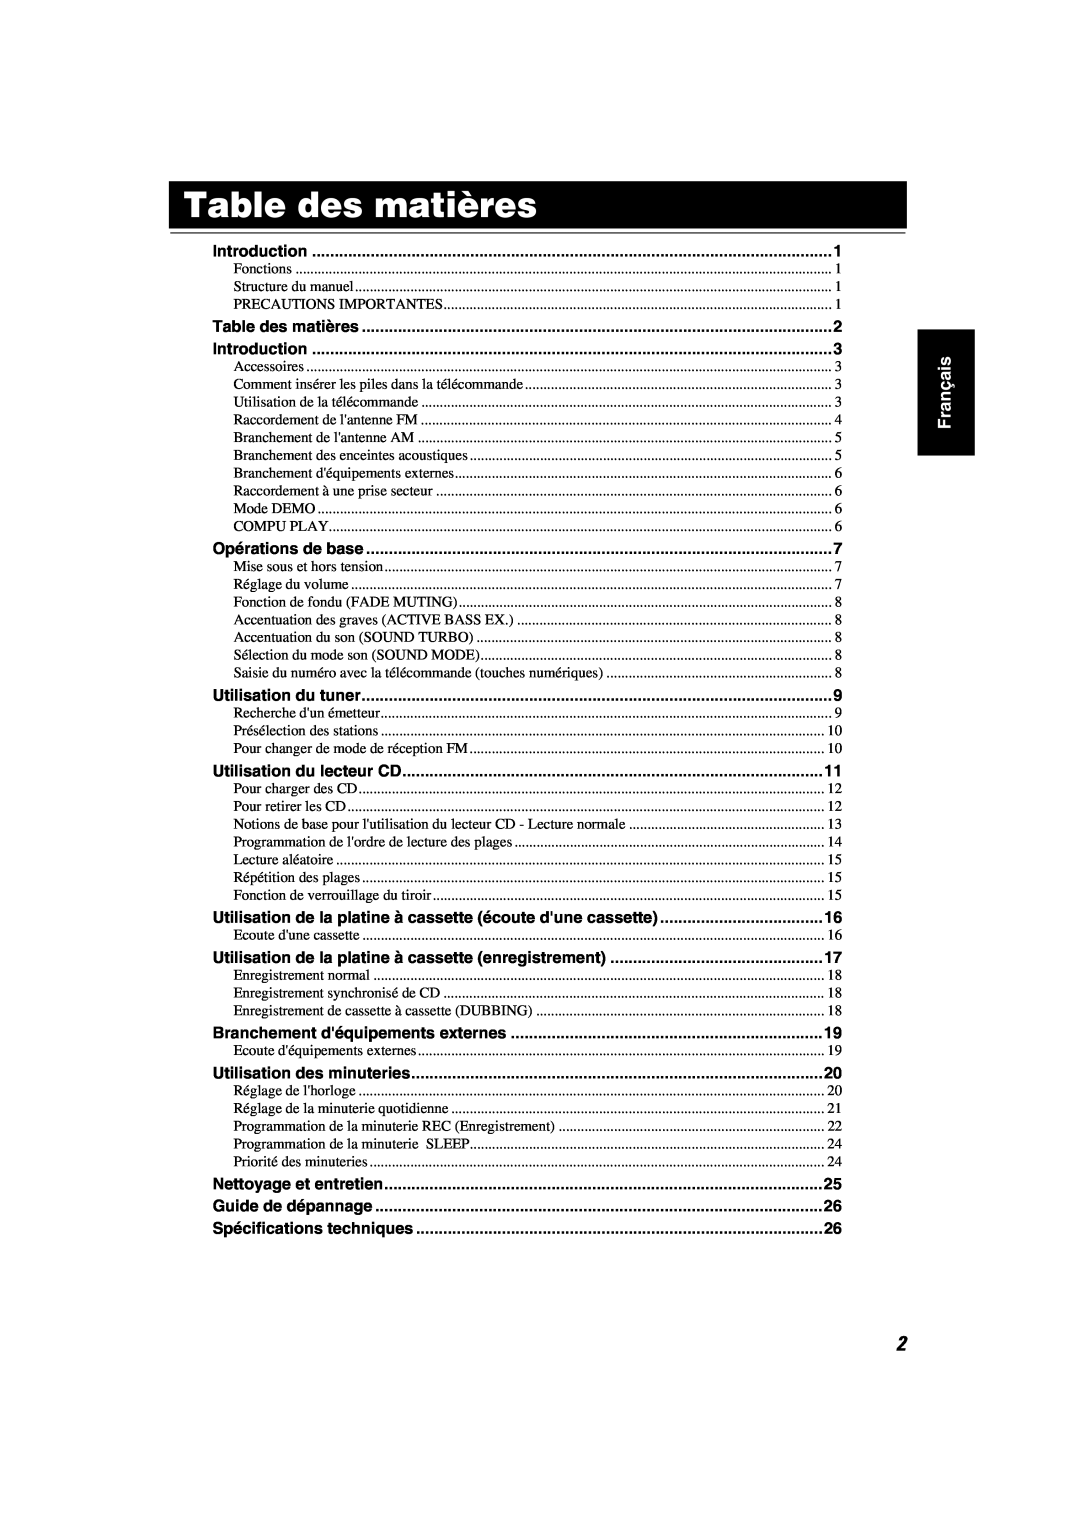 JVC MX-KA6 manual Table des matières, Français 